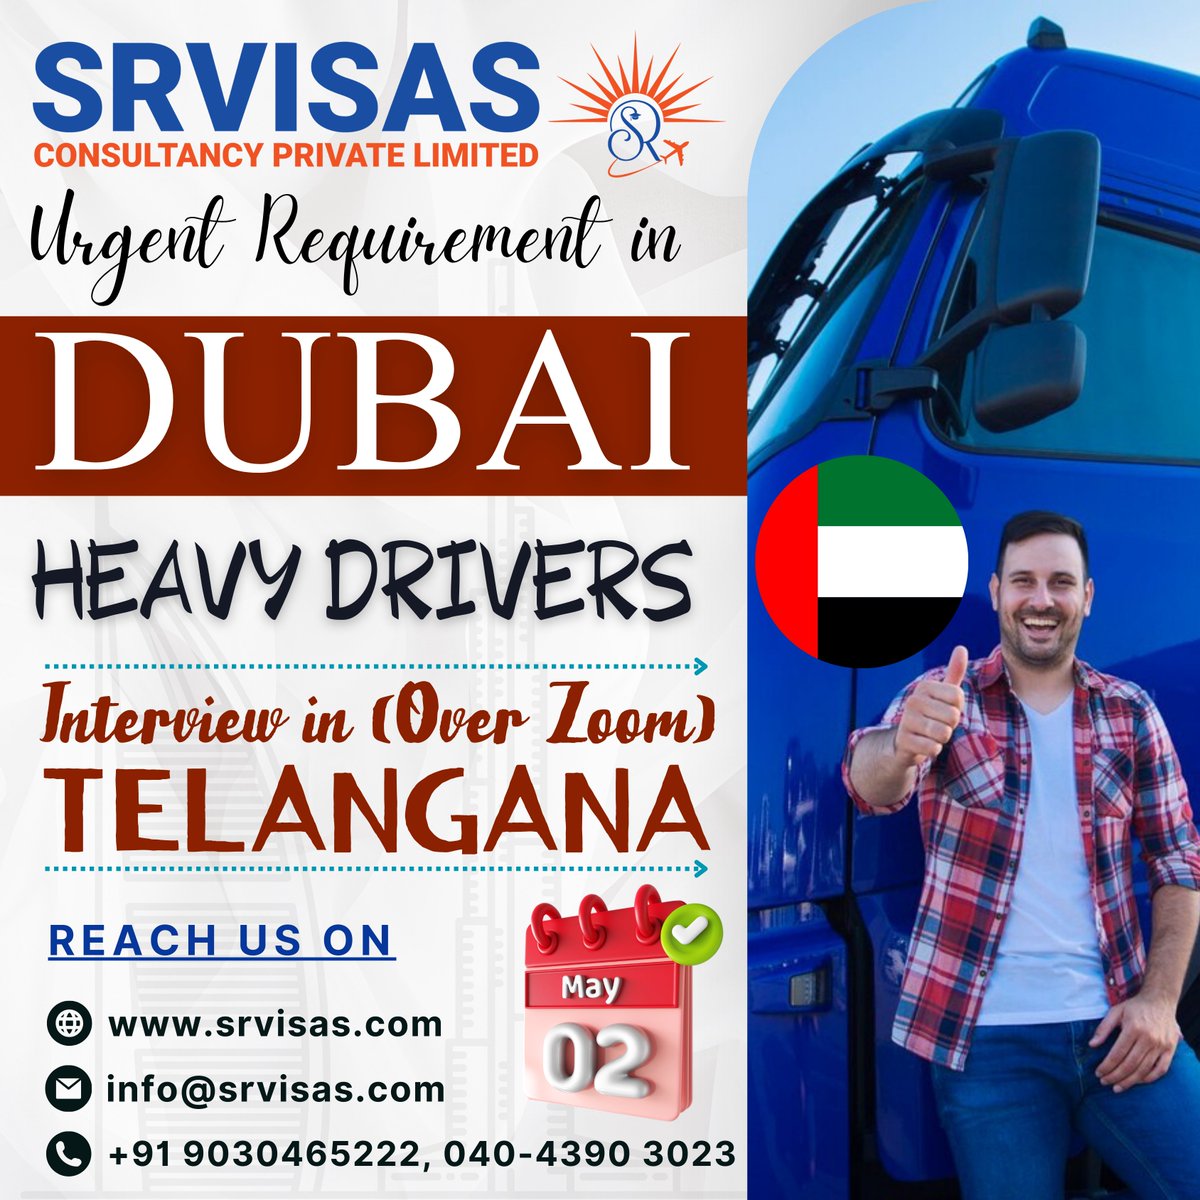 Urgent Requirement in DUBAI. Heavy Drivers. Interview in (Over Zoom) Telangana. 
#WorkVisa #CareerGoals #VisaService #WorkAbroad #ImmigrationServices #VisaAssistance #VisaExpert #VisaConsultation #VisaApplication #WorkVisa #VisaProcess #VisaSupport #TravelWithEase #VisaExperts